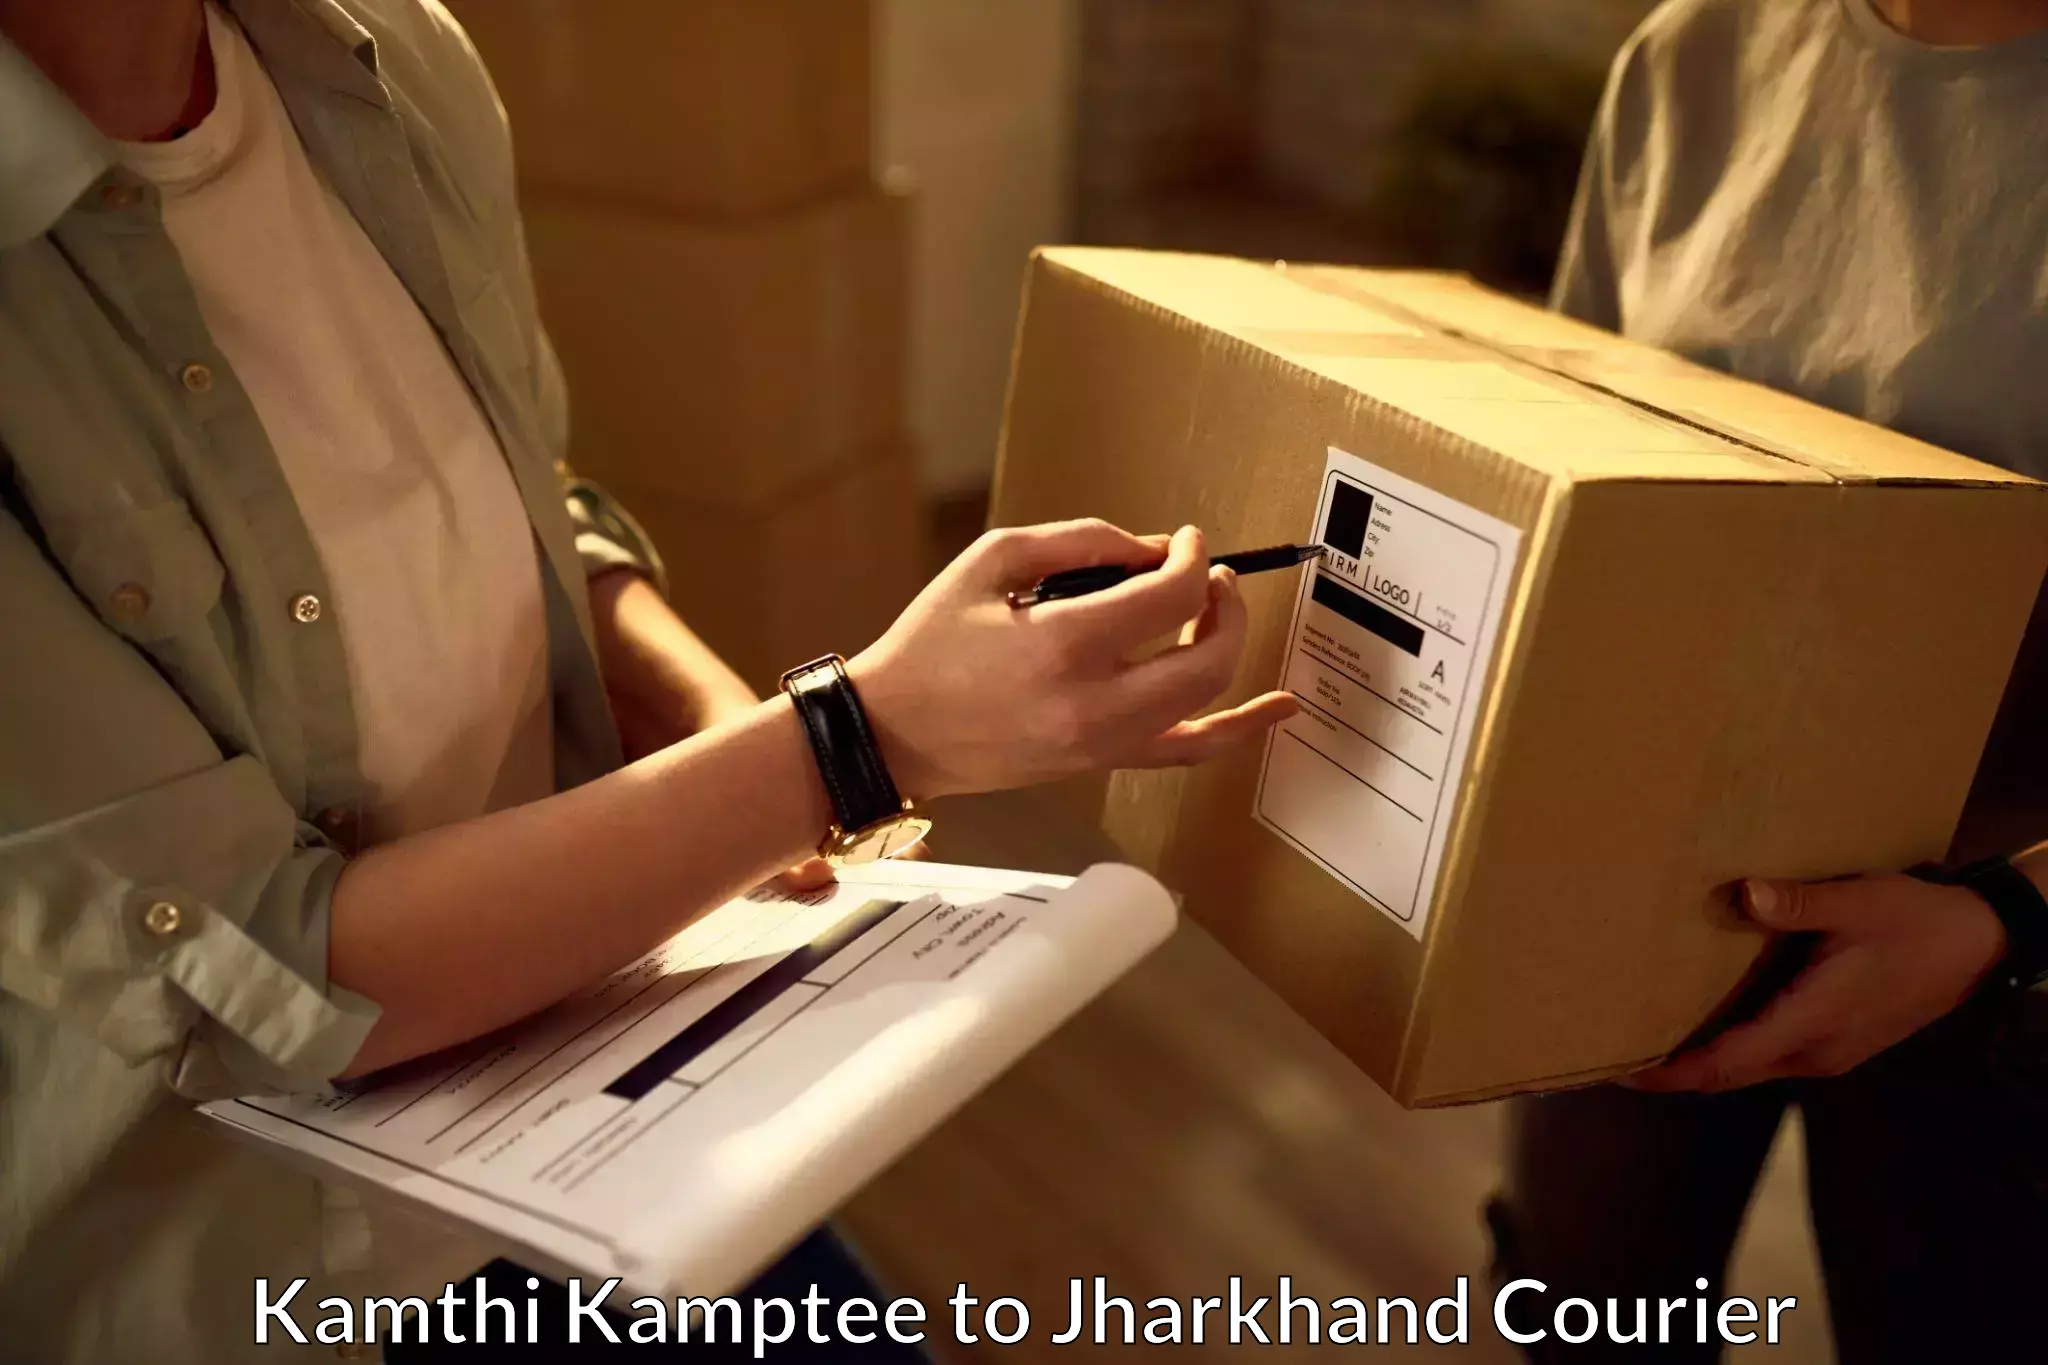 Courier service innovation Kamthi Kamptee to Jharkhand